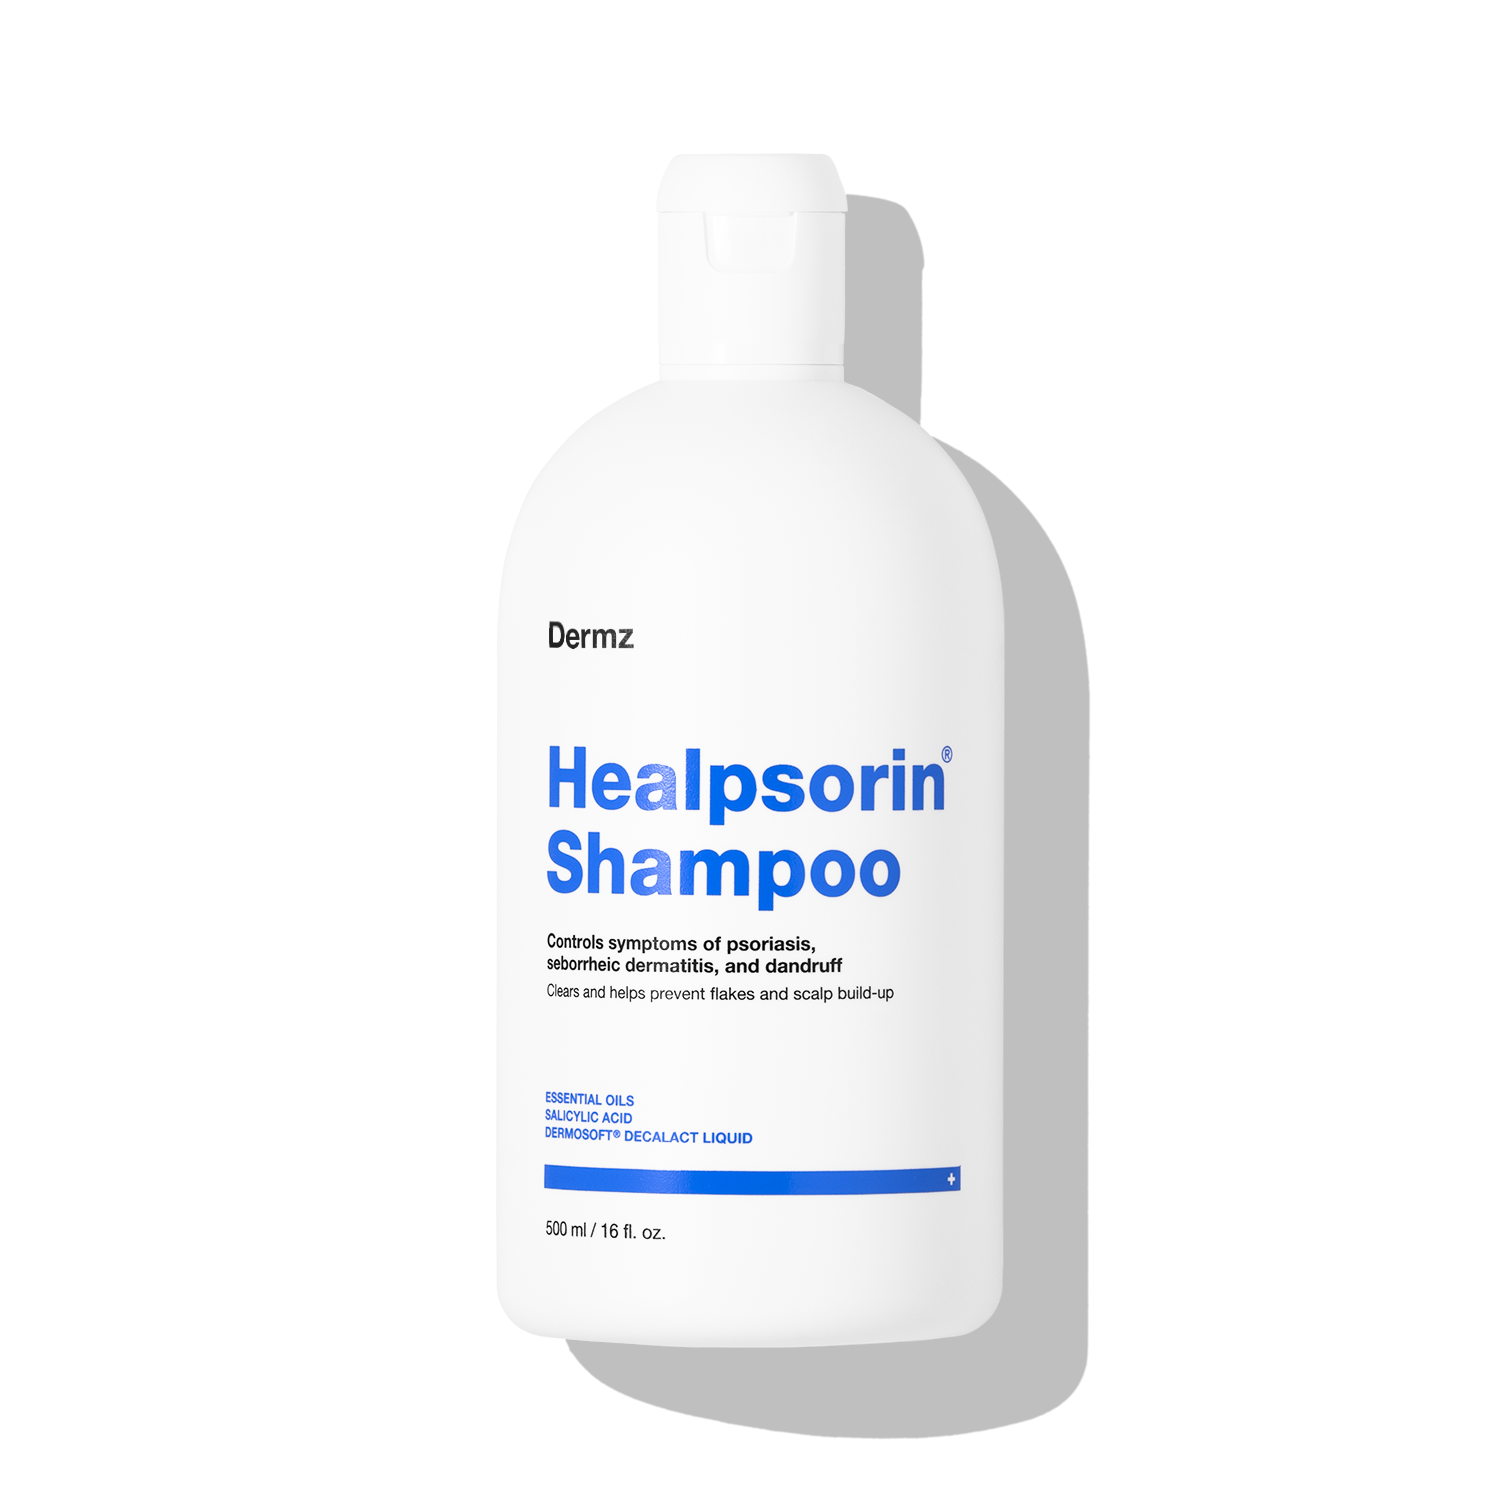 Healpsorin Body Oil